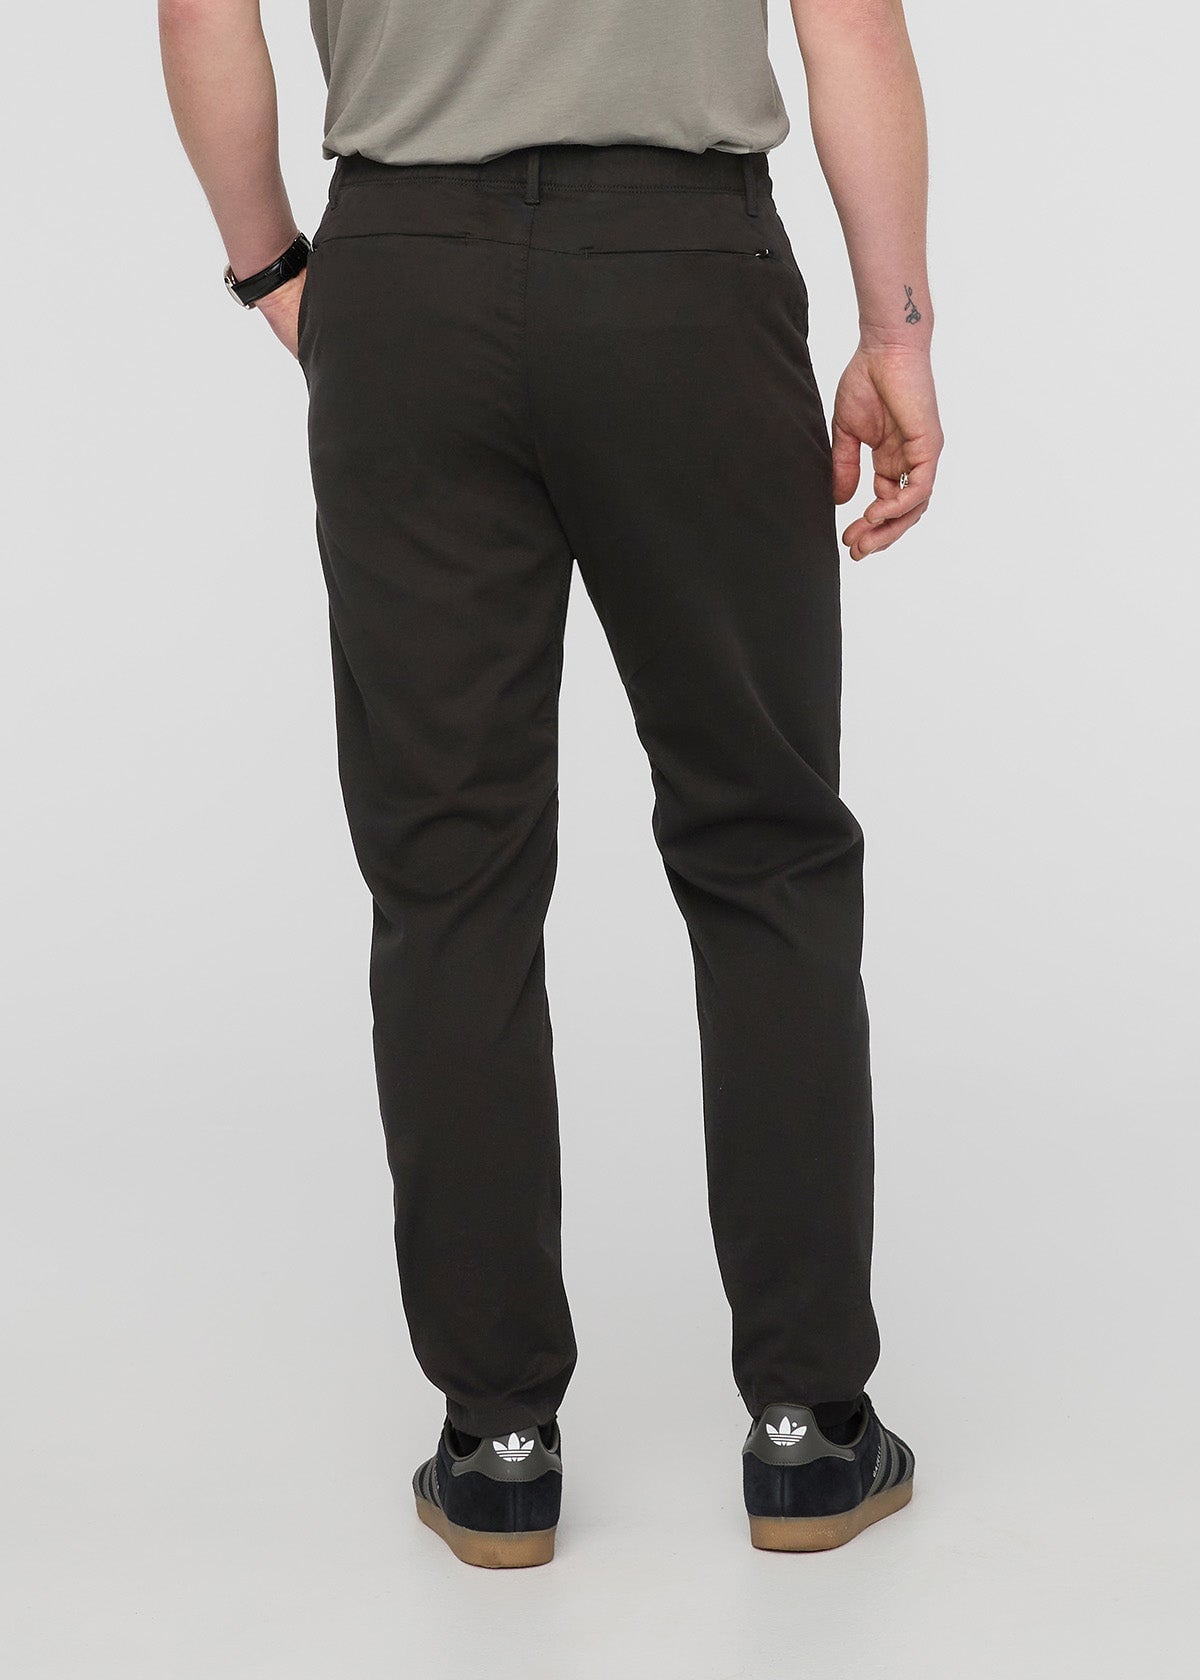 R-MEYER-115093160009 Men's Meyer Chino Trousers plain black 97% cotton 3%  elastan